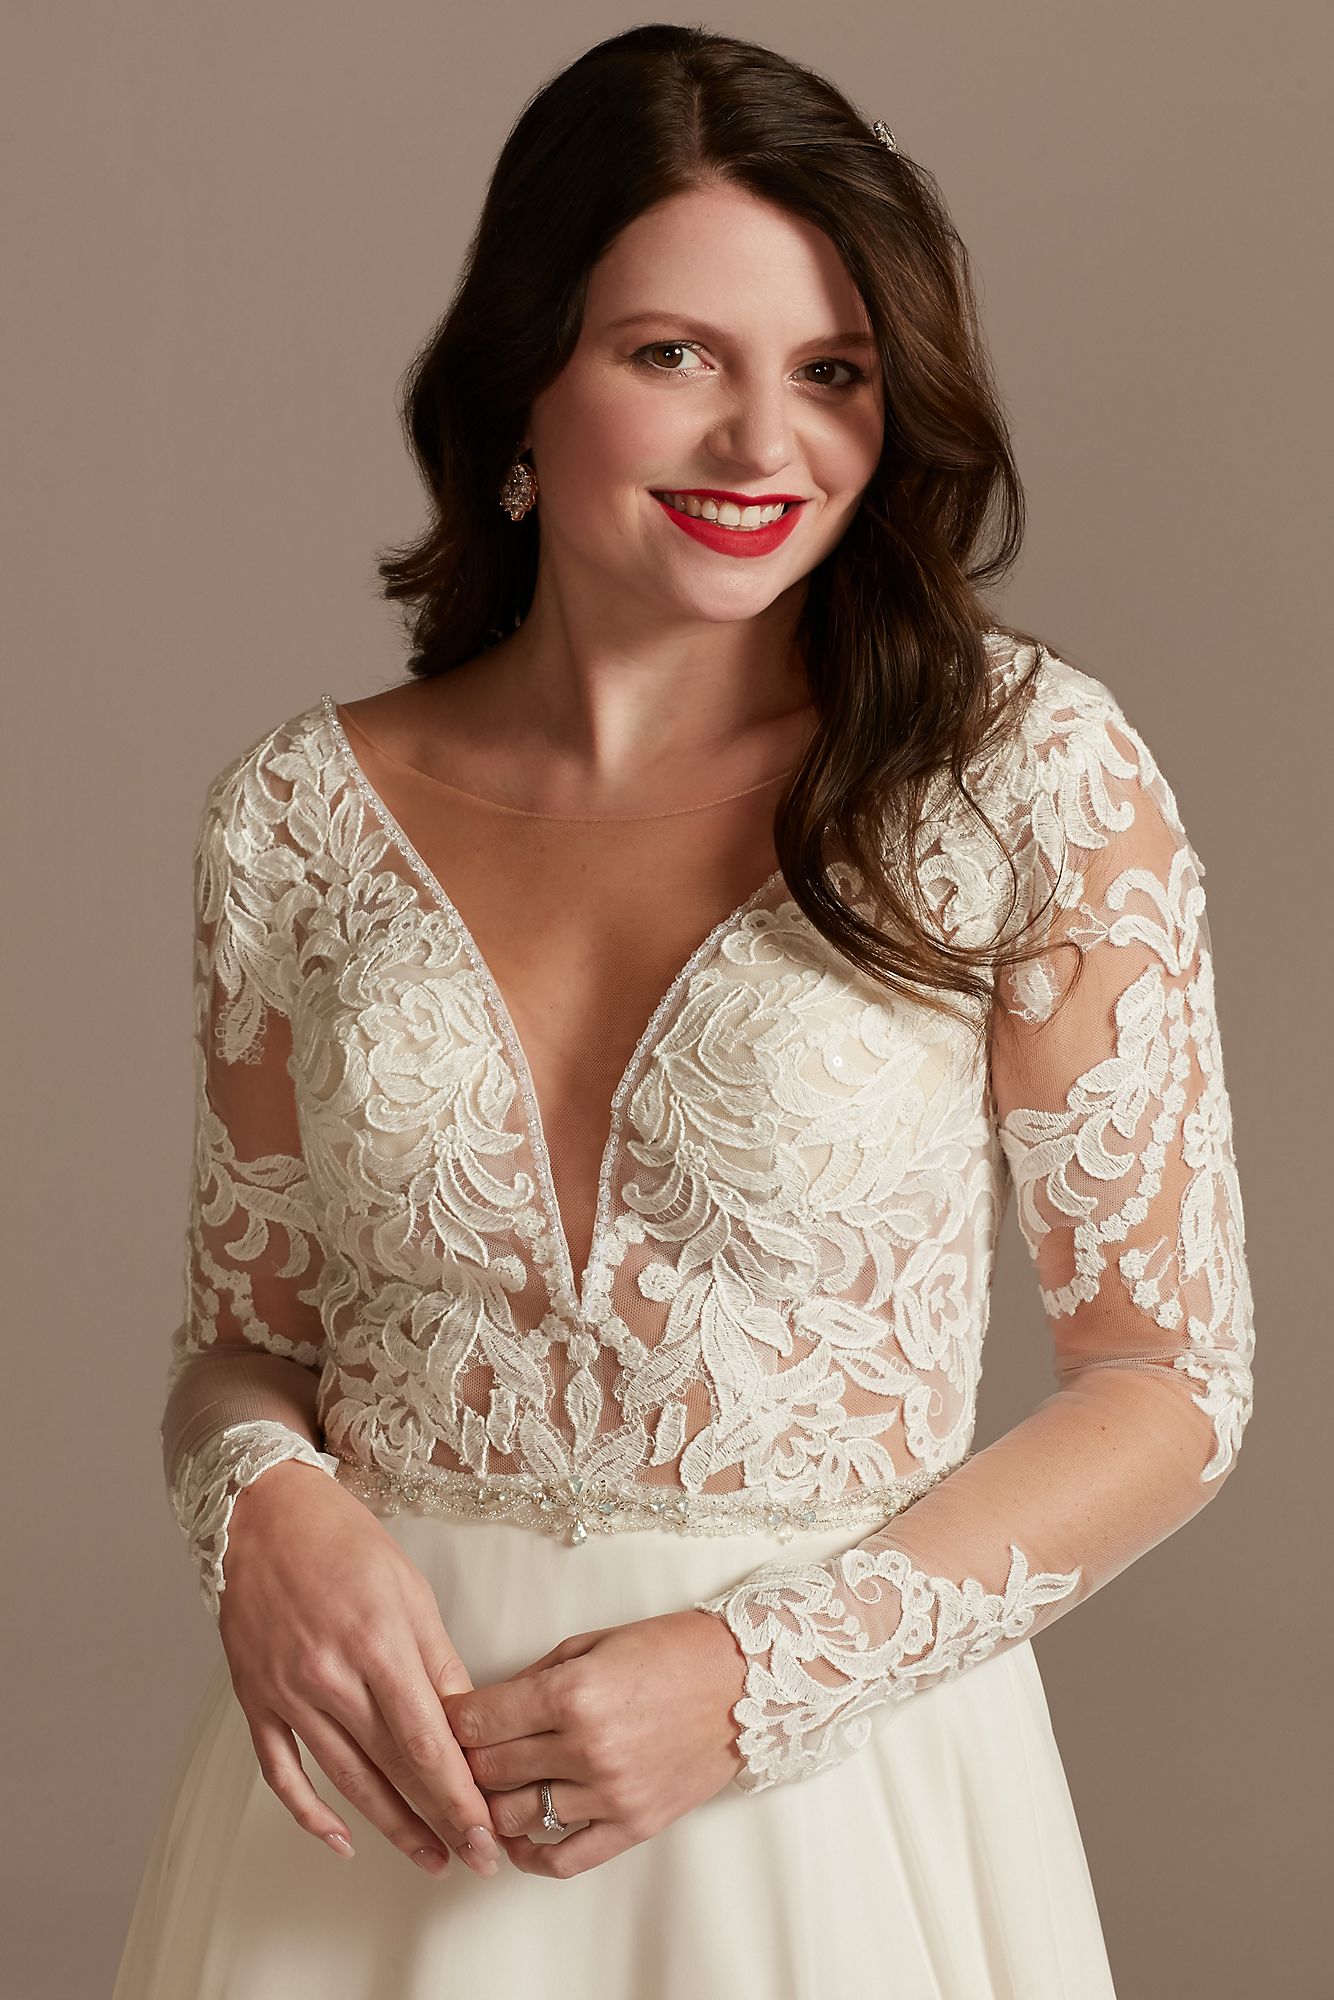 Lace Applique Long Sleeve Chiffon Wedding Dress Galina Signature SLSWG842